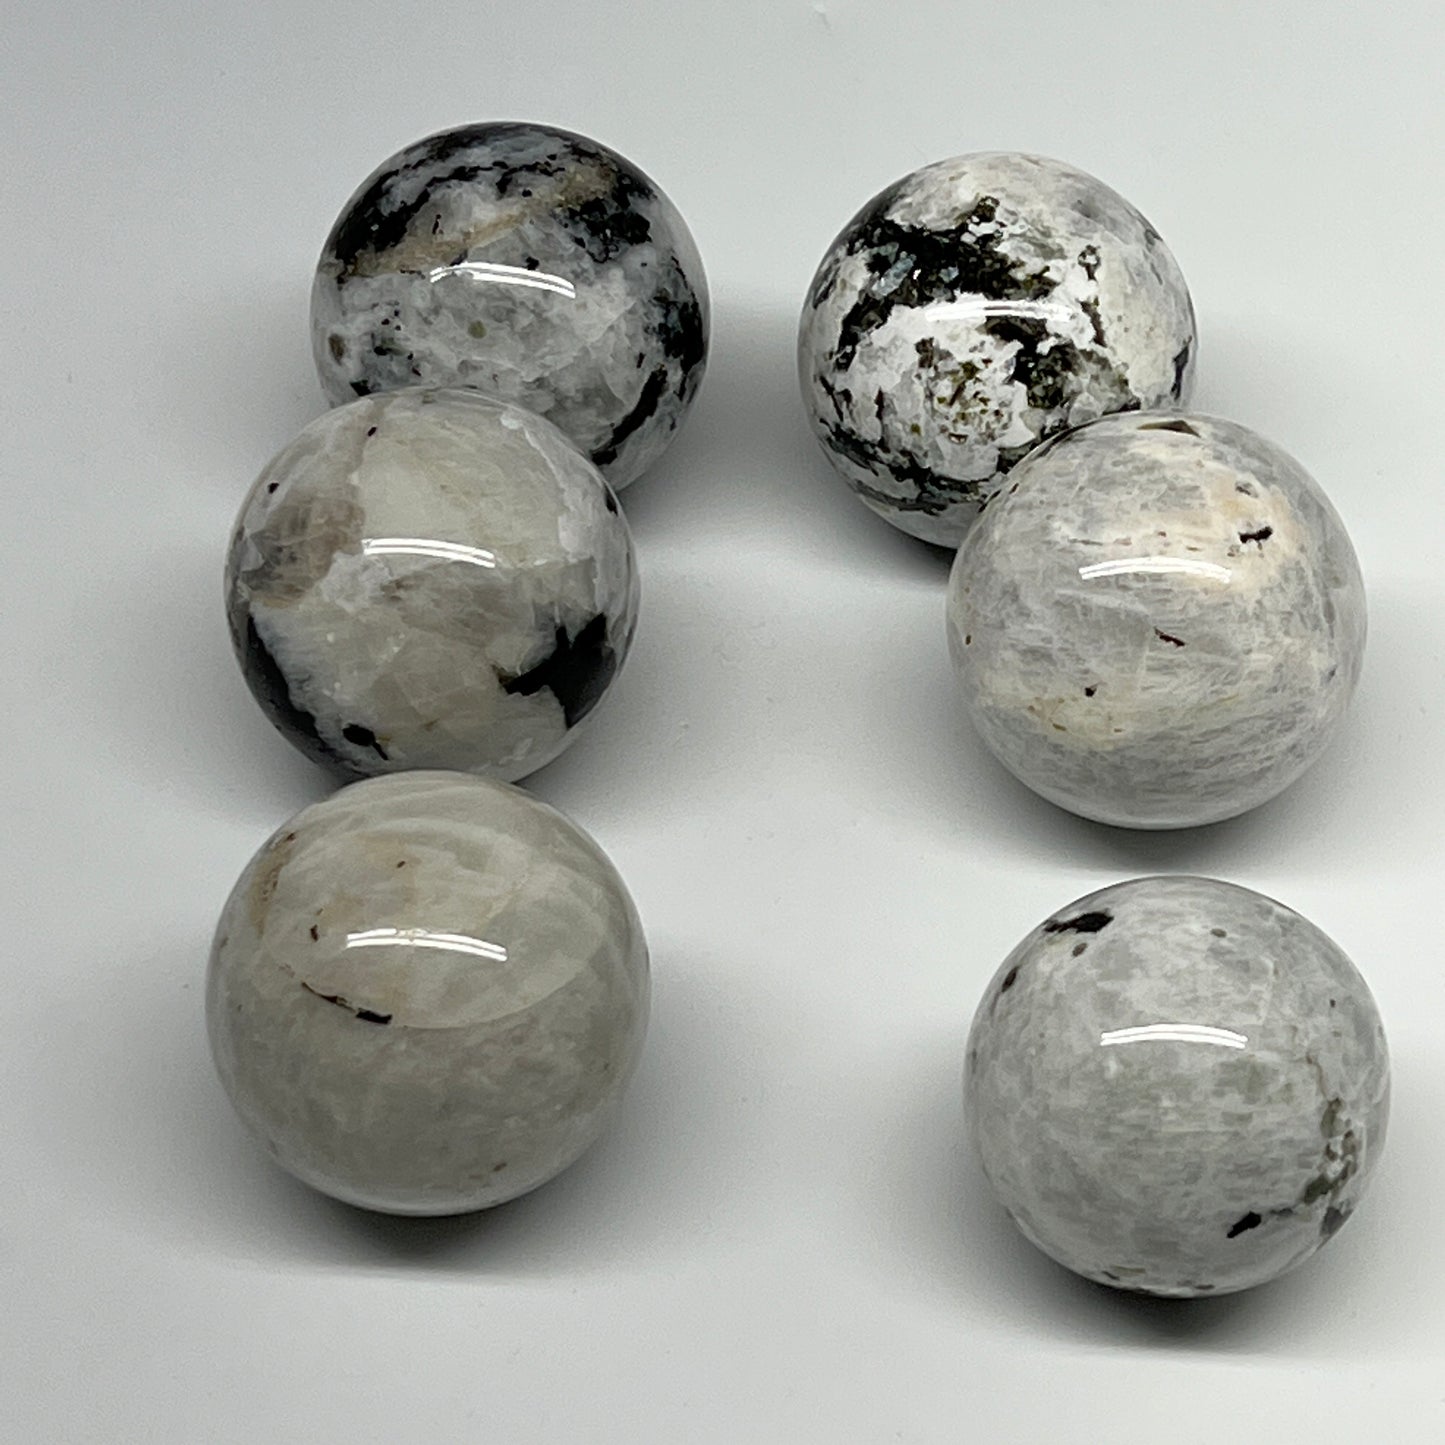 1005g, 1.8" - 2", 6pcs, Rainbow Moonstone Spheres Gemstones @India, B21422